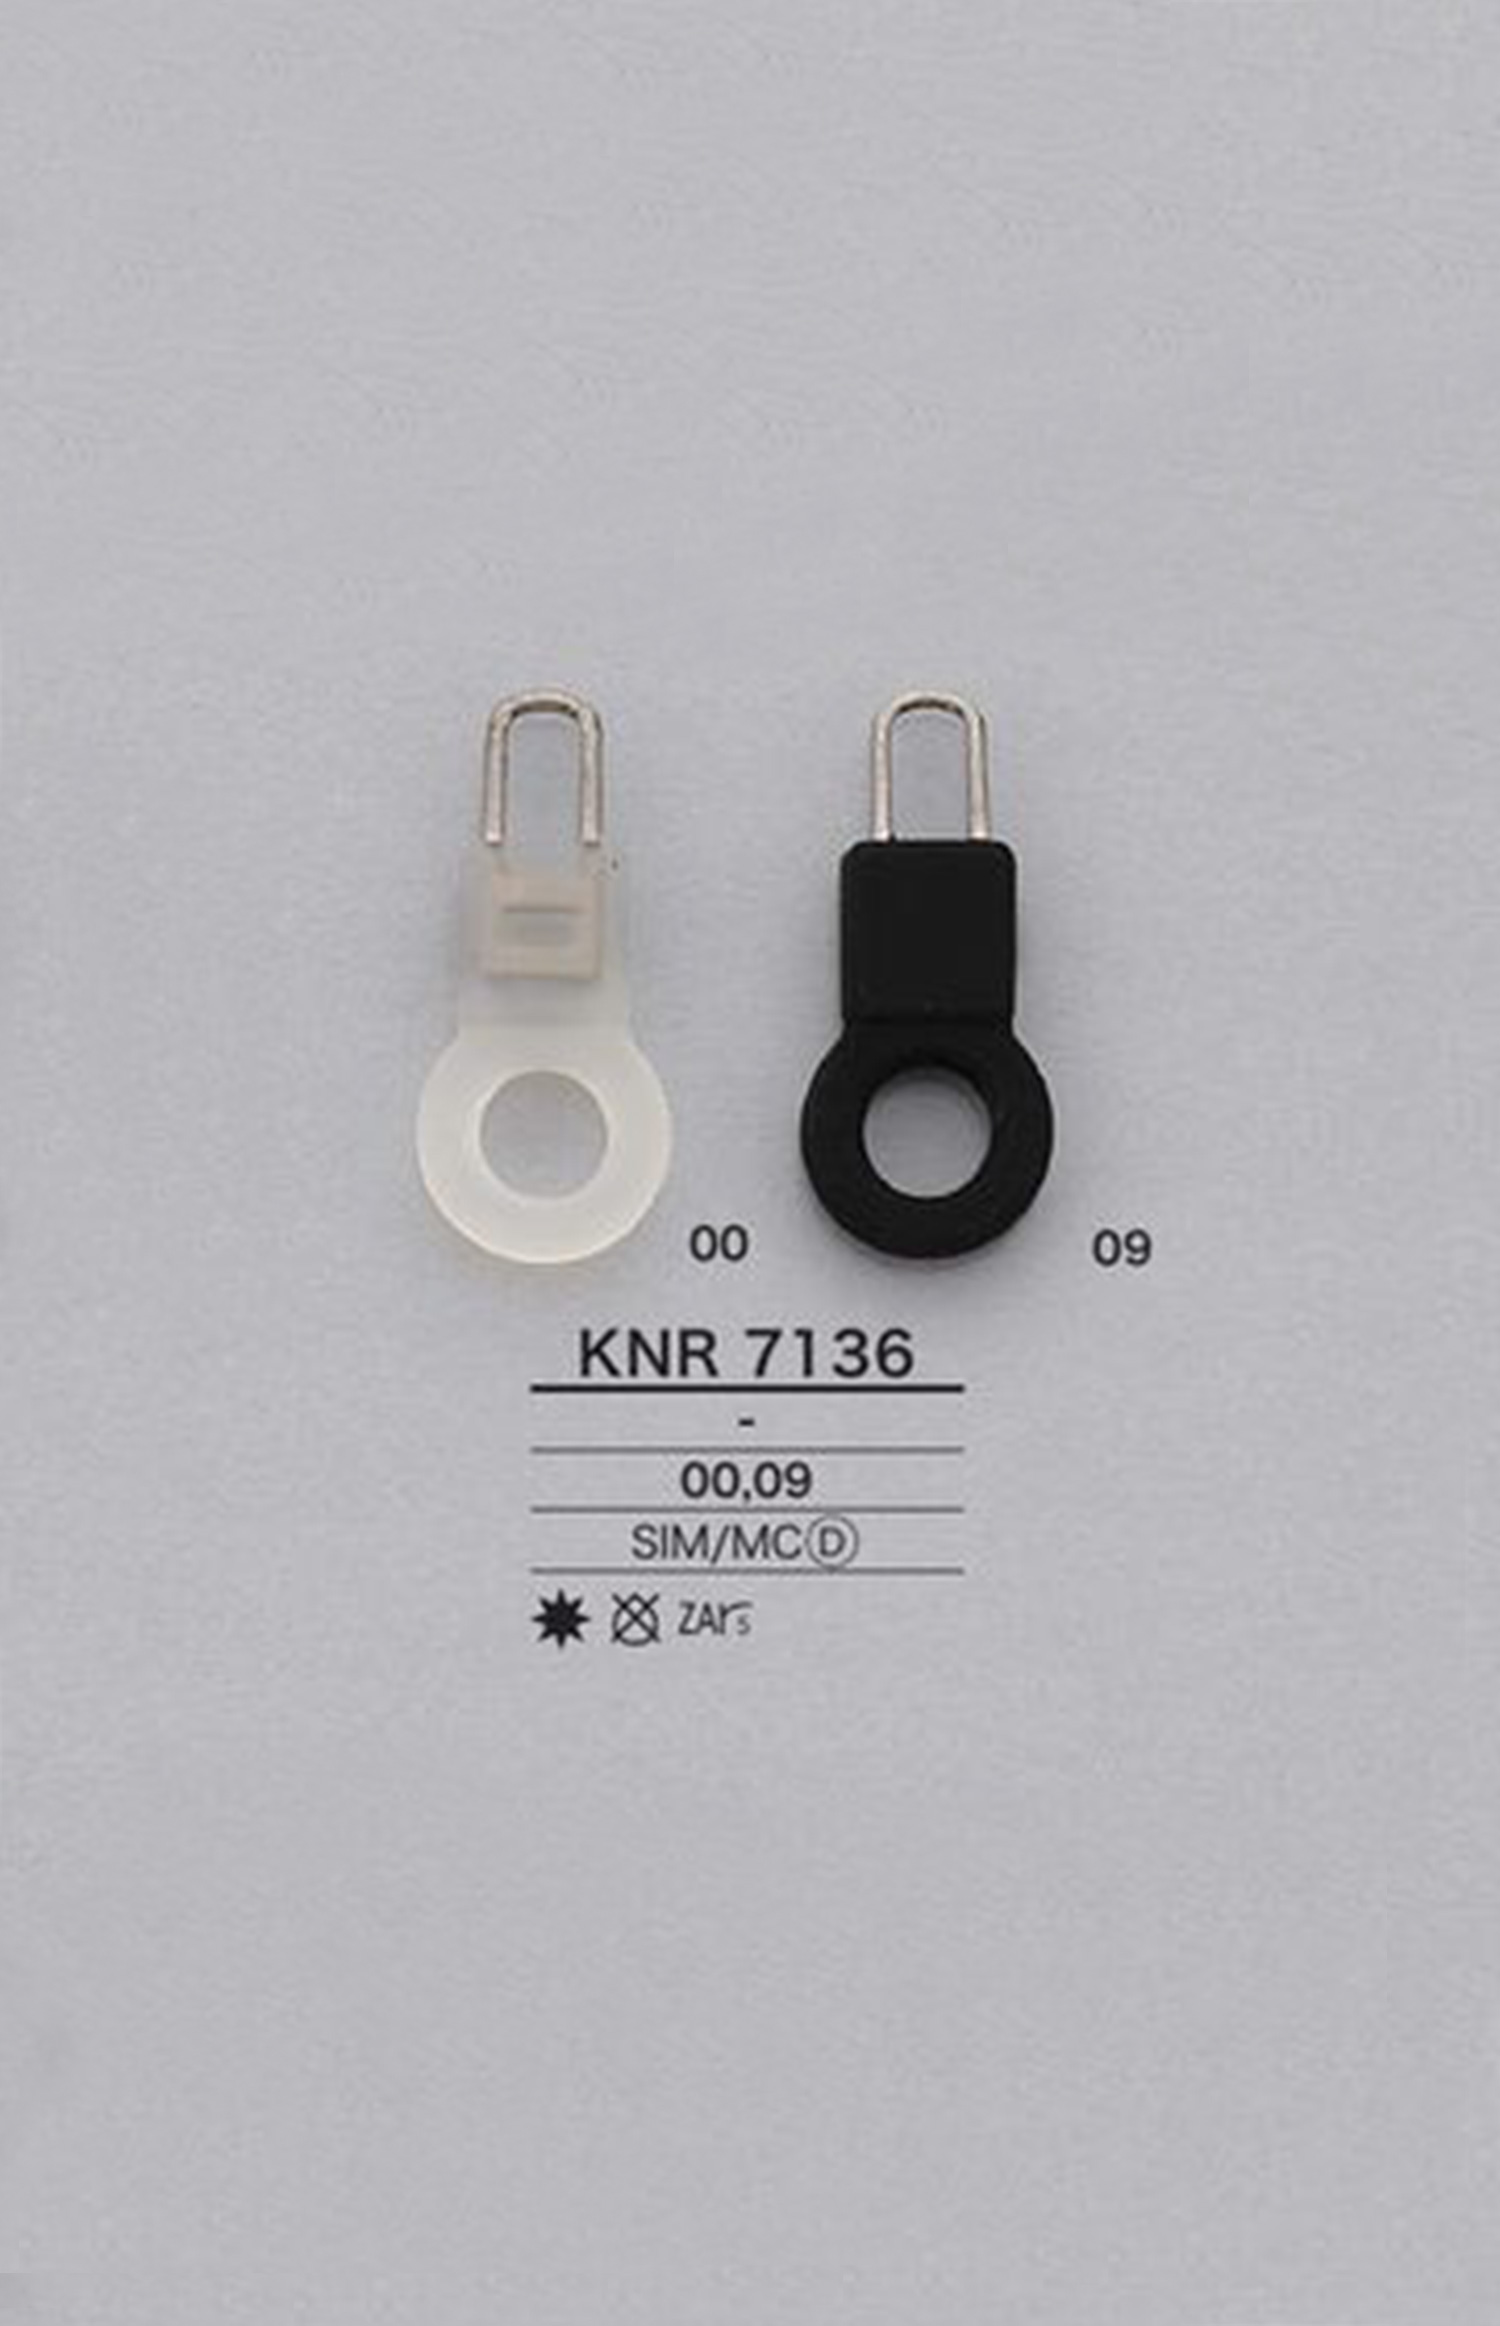 KNR7136 Silicone Ring Zipper Point (Pull Tab) IRIS